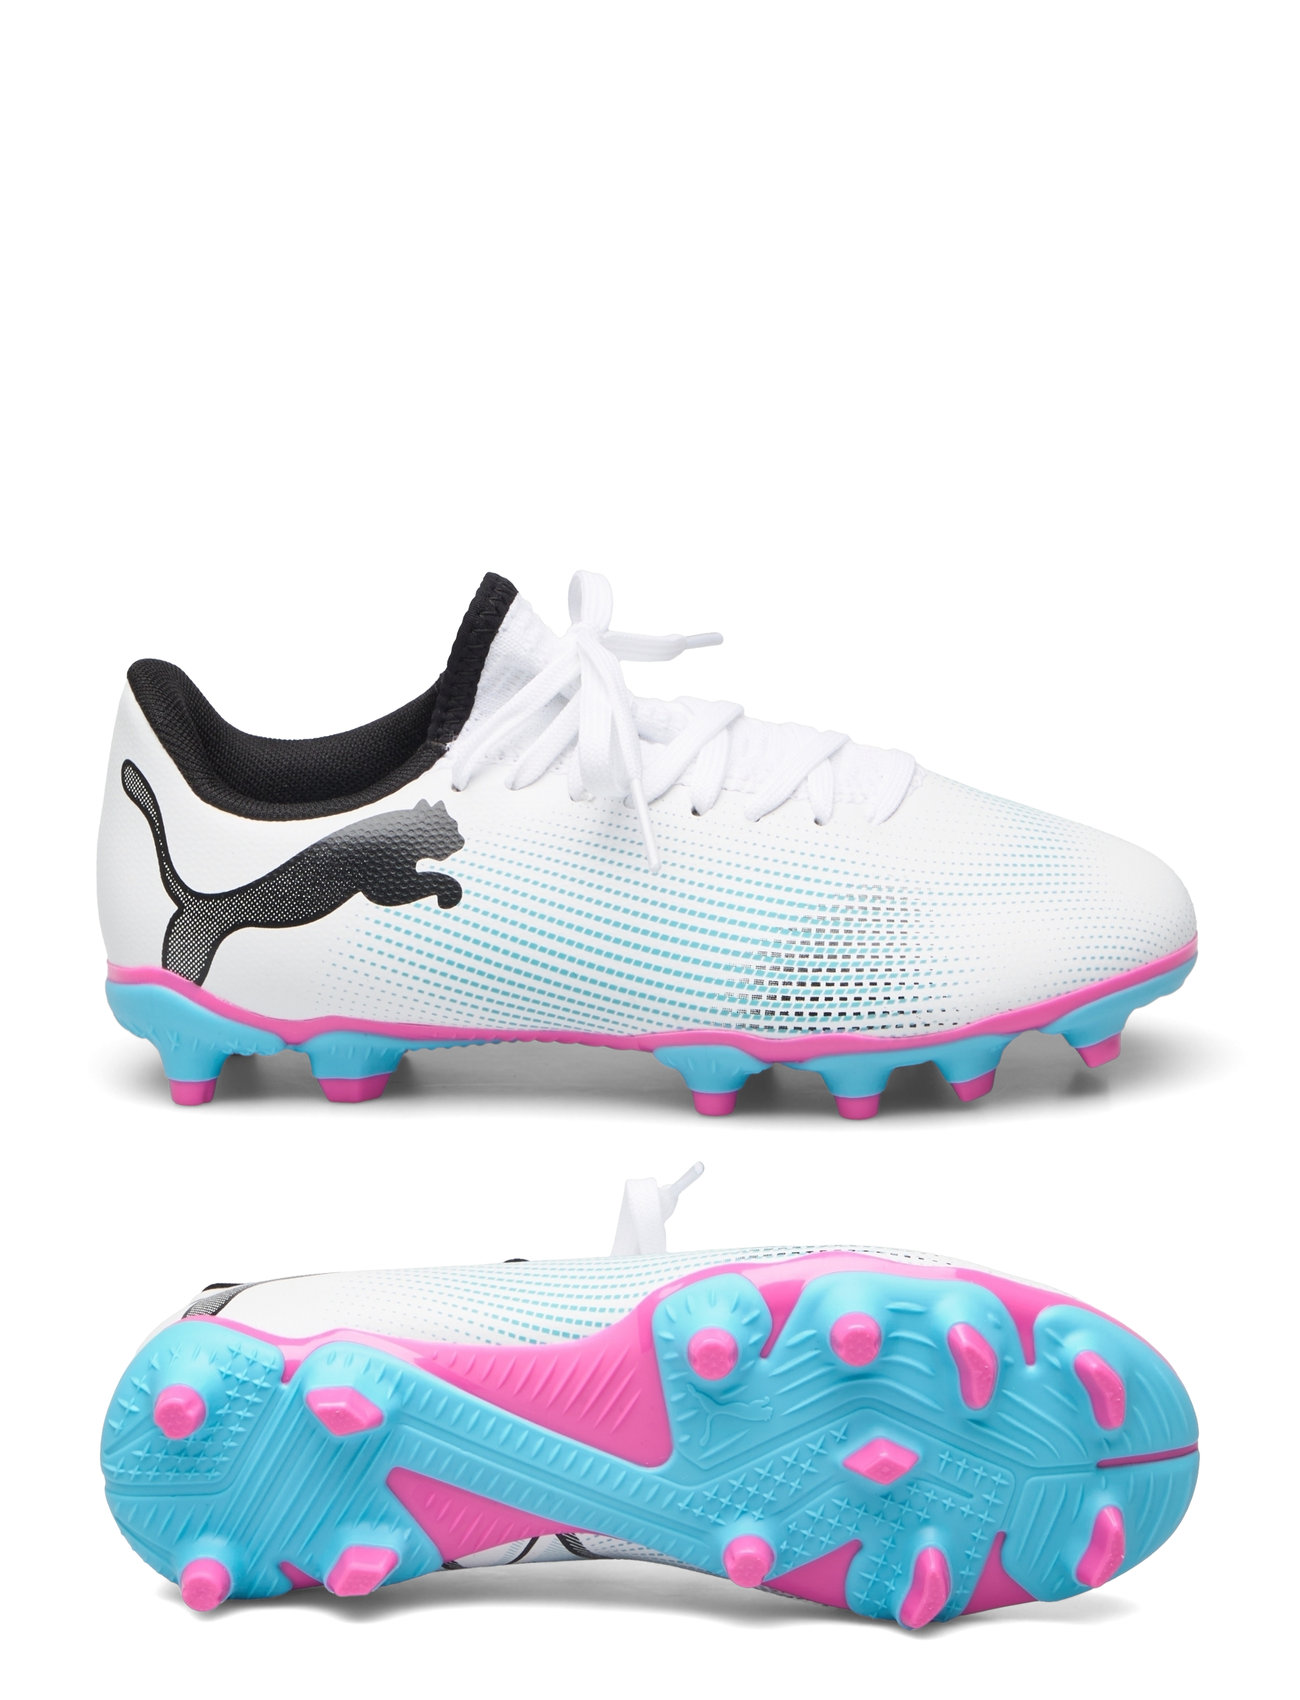 Future 7 Play Fg/Ag Jr Sport Sports Shoes Football Boots White PUMA